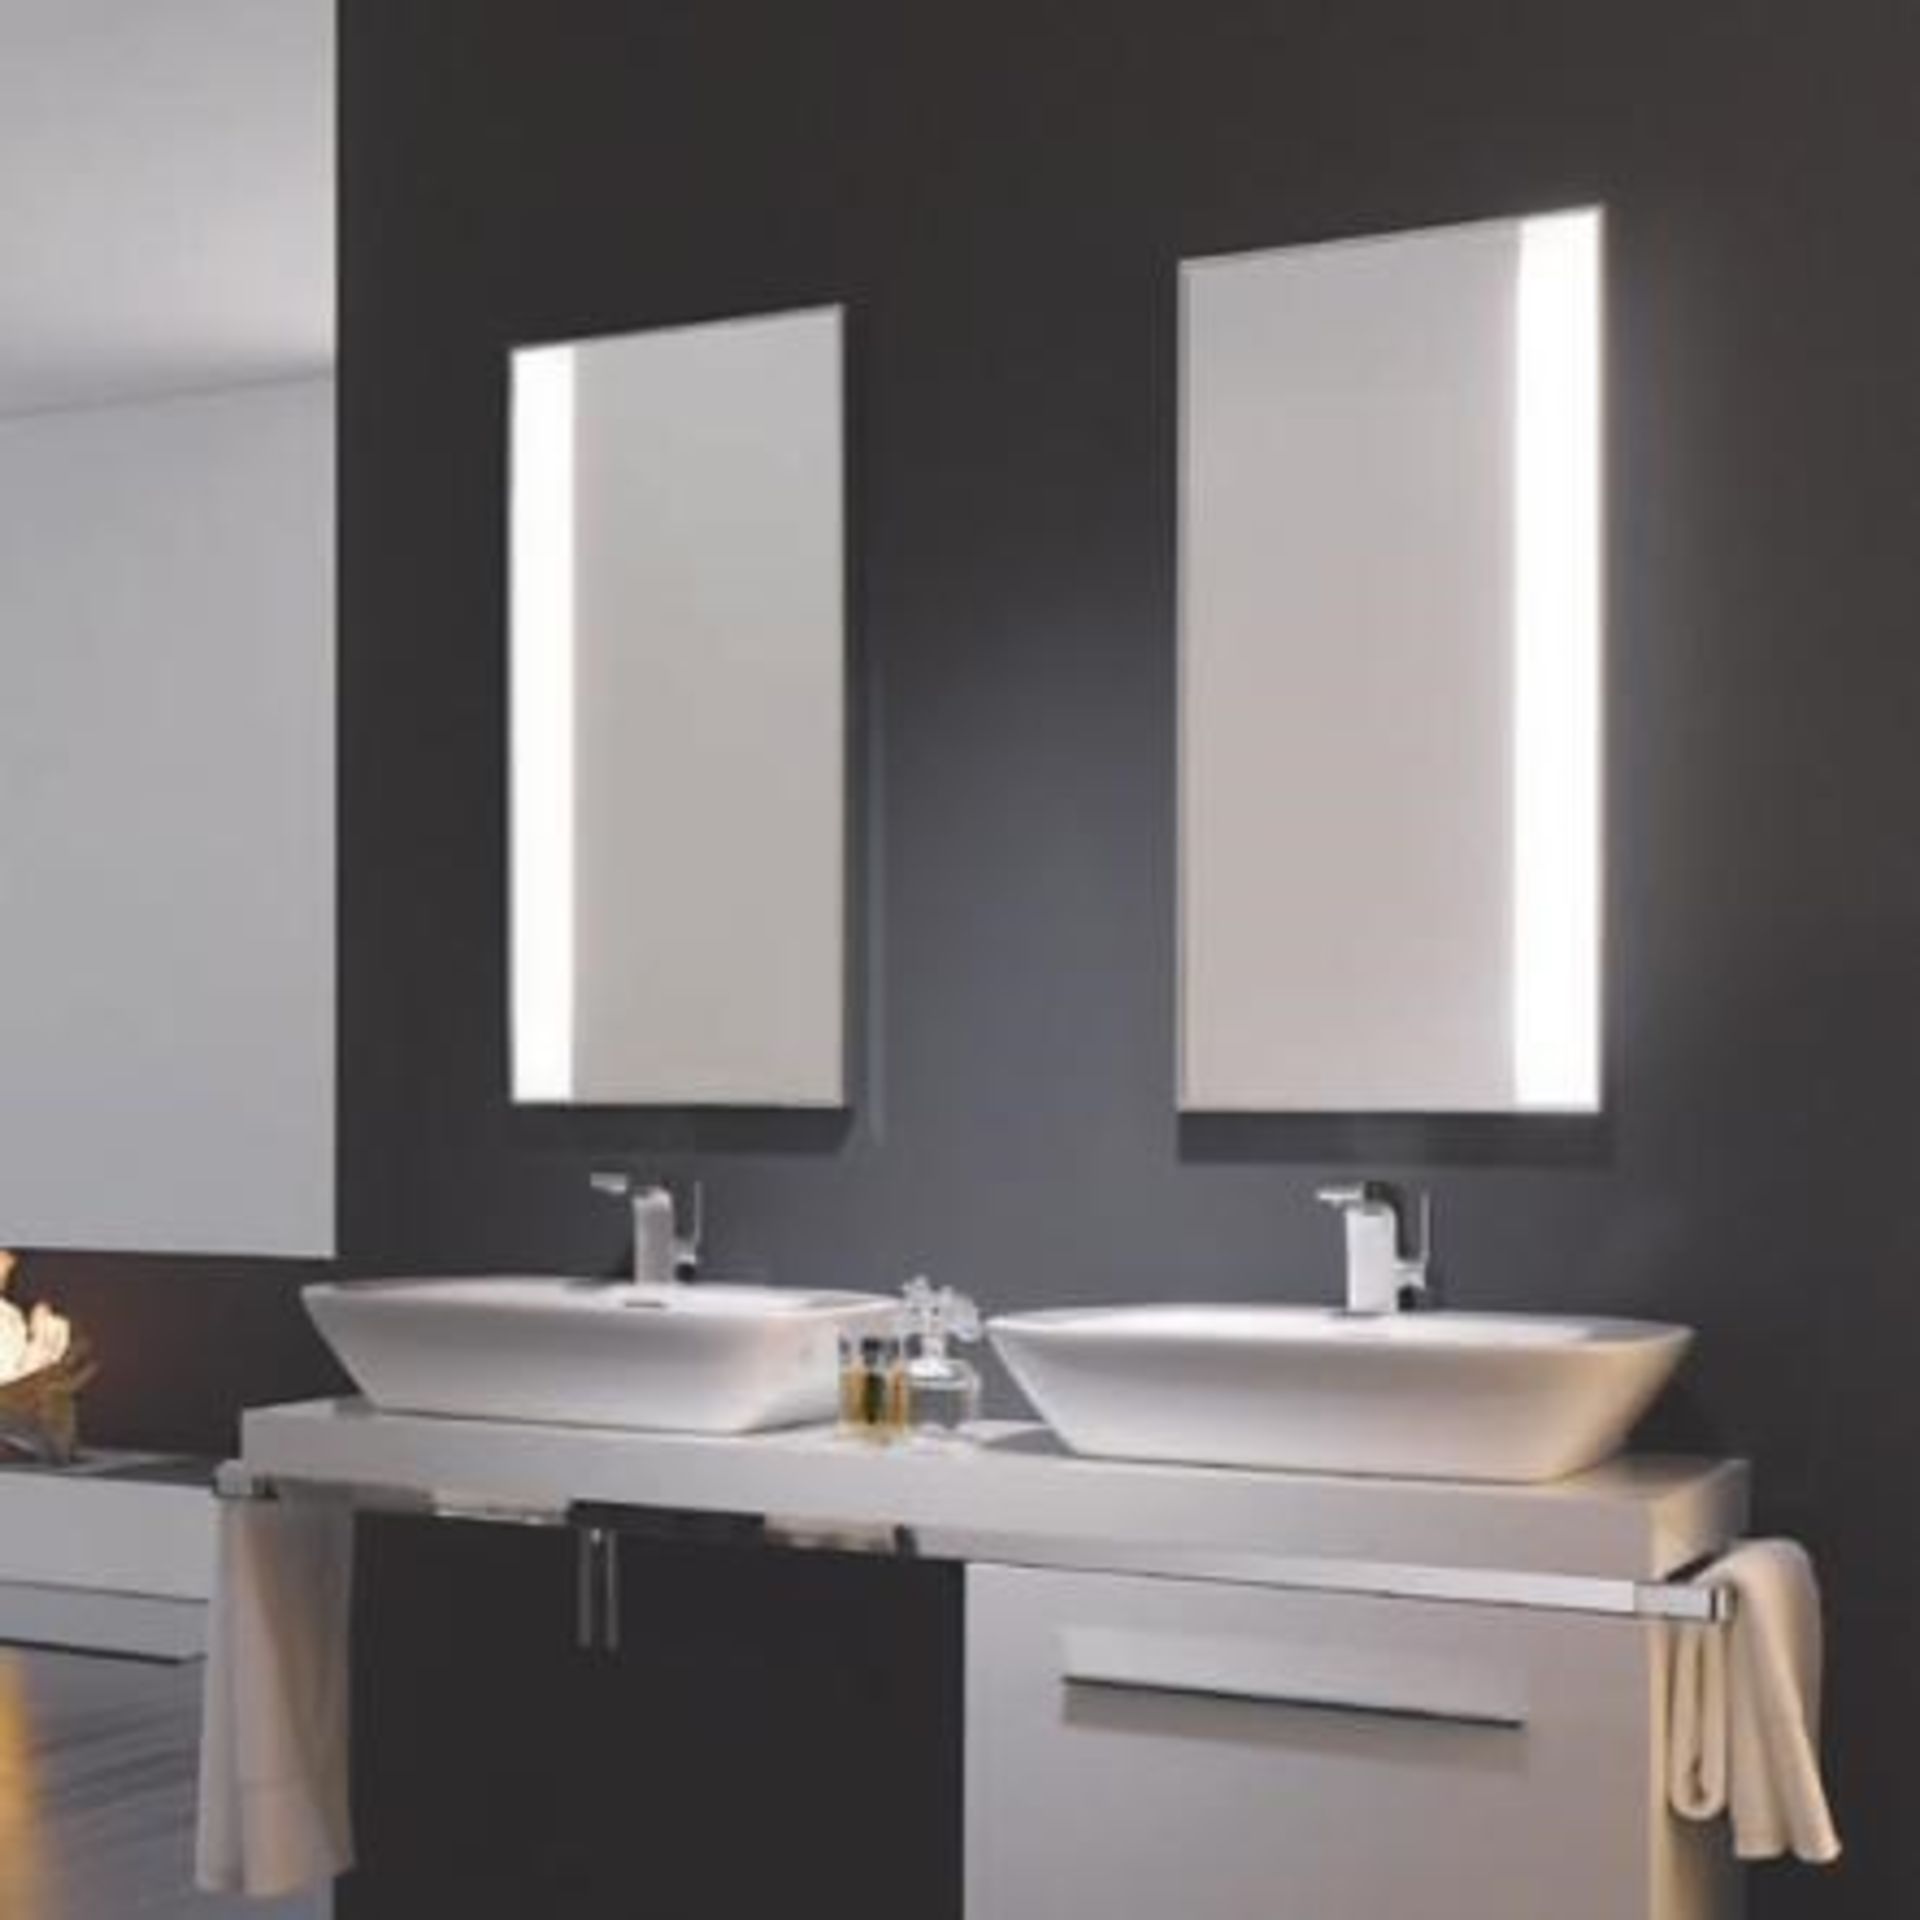 (RR30) 400x900mm Keramag Silk light mirror, right or left.RRP £887.99.The Keramag Silk mirror ...